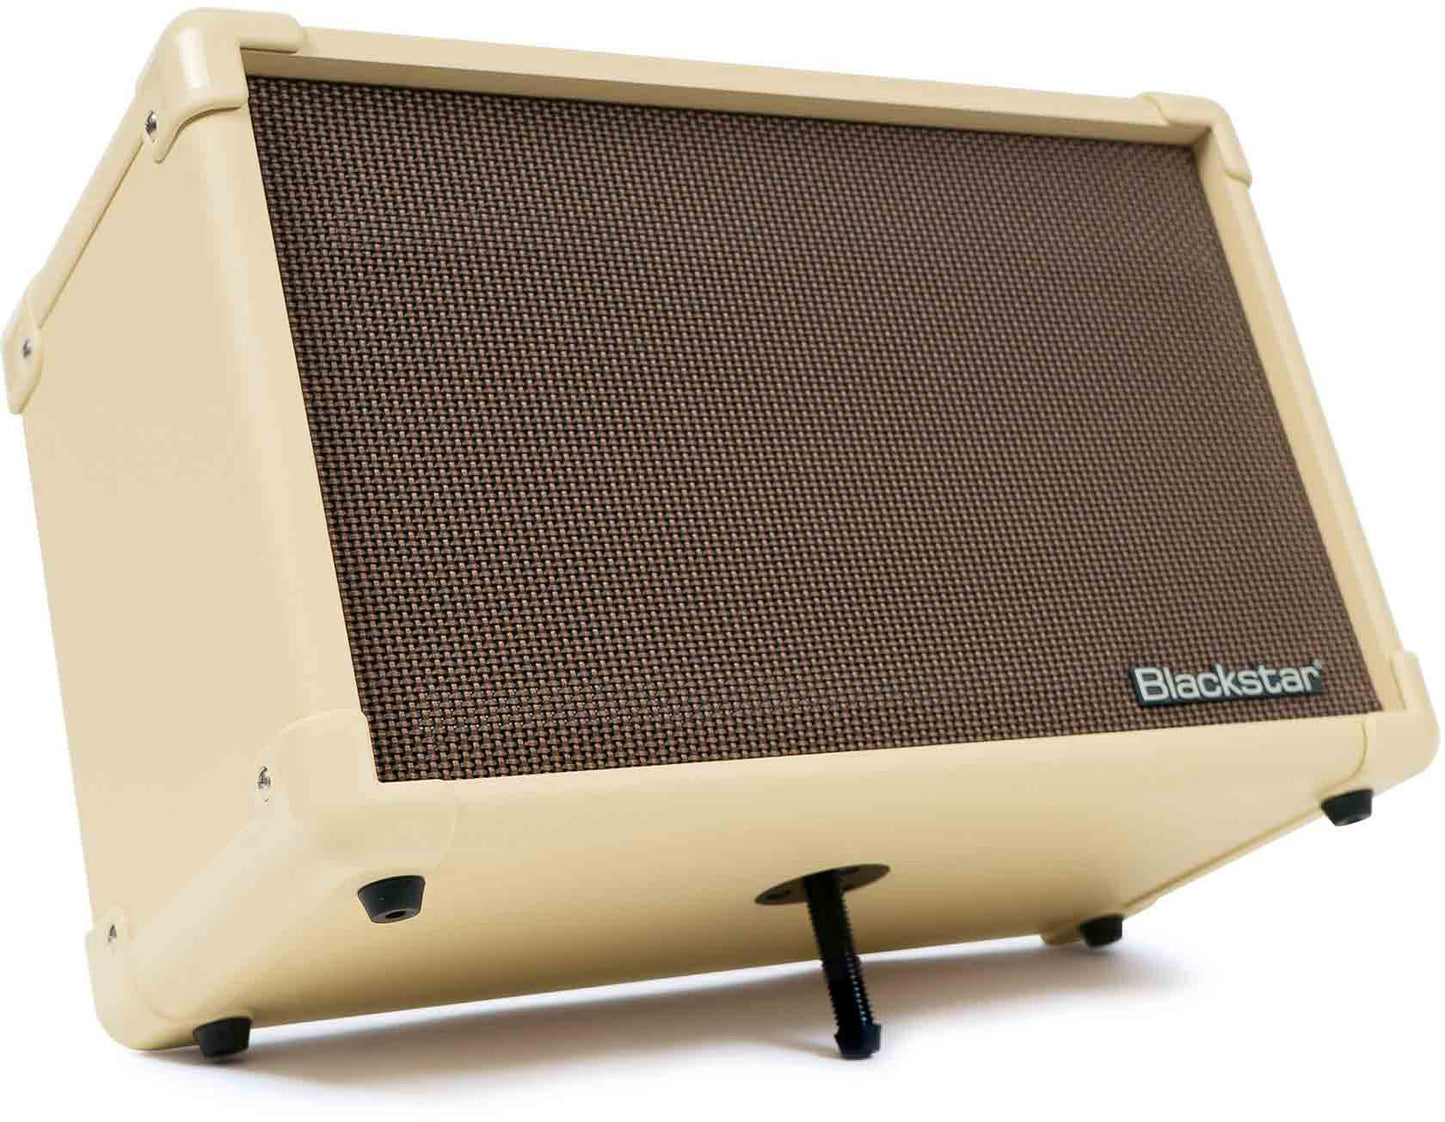 Blackstar Acoustic:Core 30 - 30 Watt Stereo Acoustic Combo Amplifier